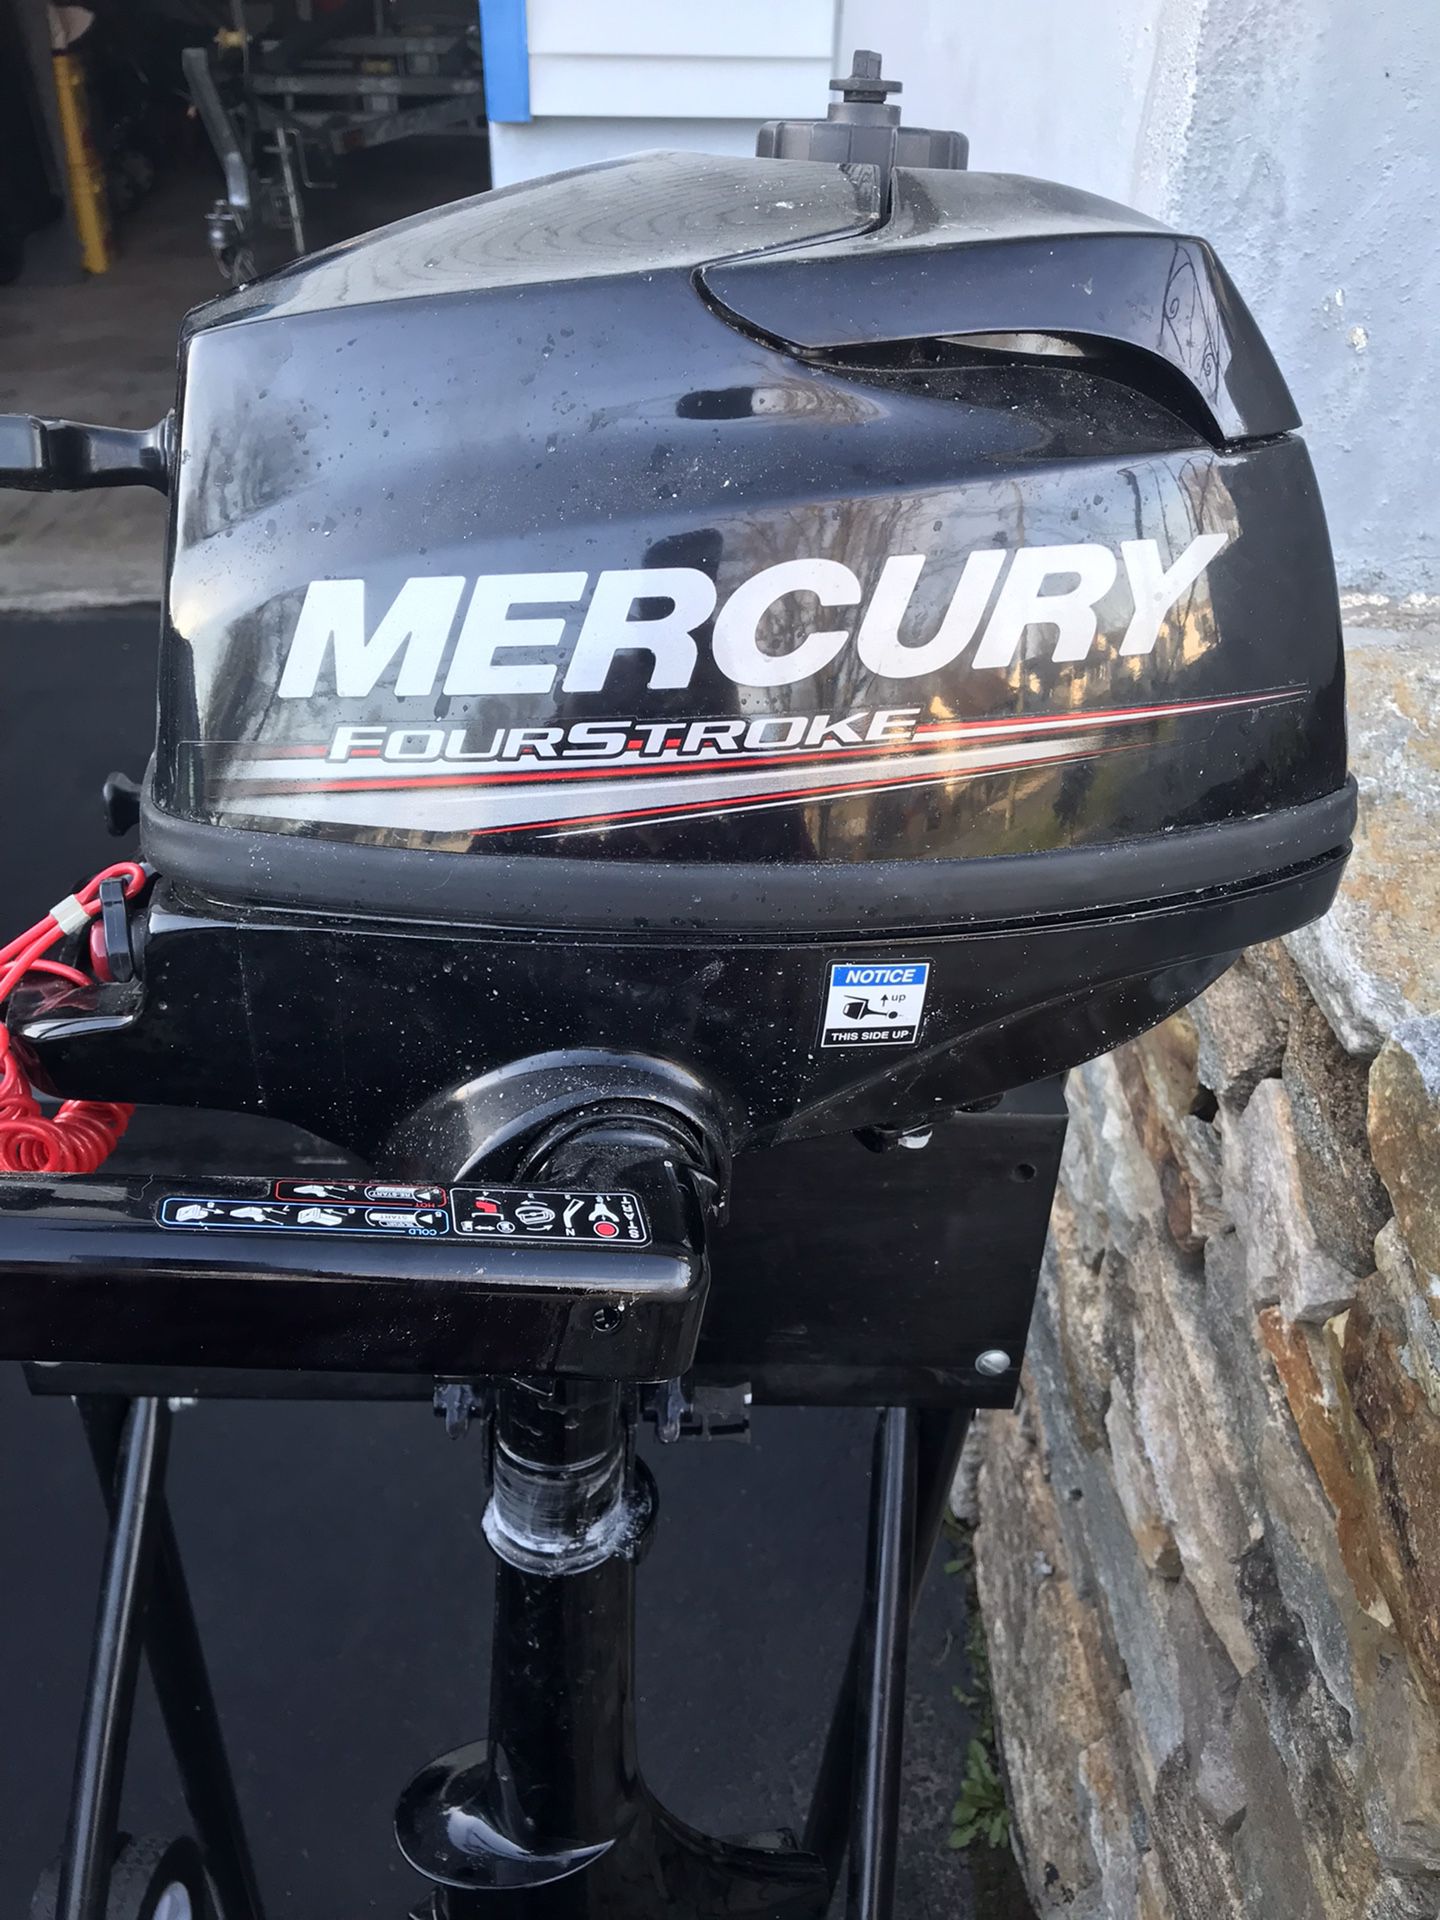 2016 Mercury 3.5 HP 4 Stroke Engine 